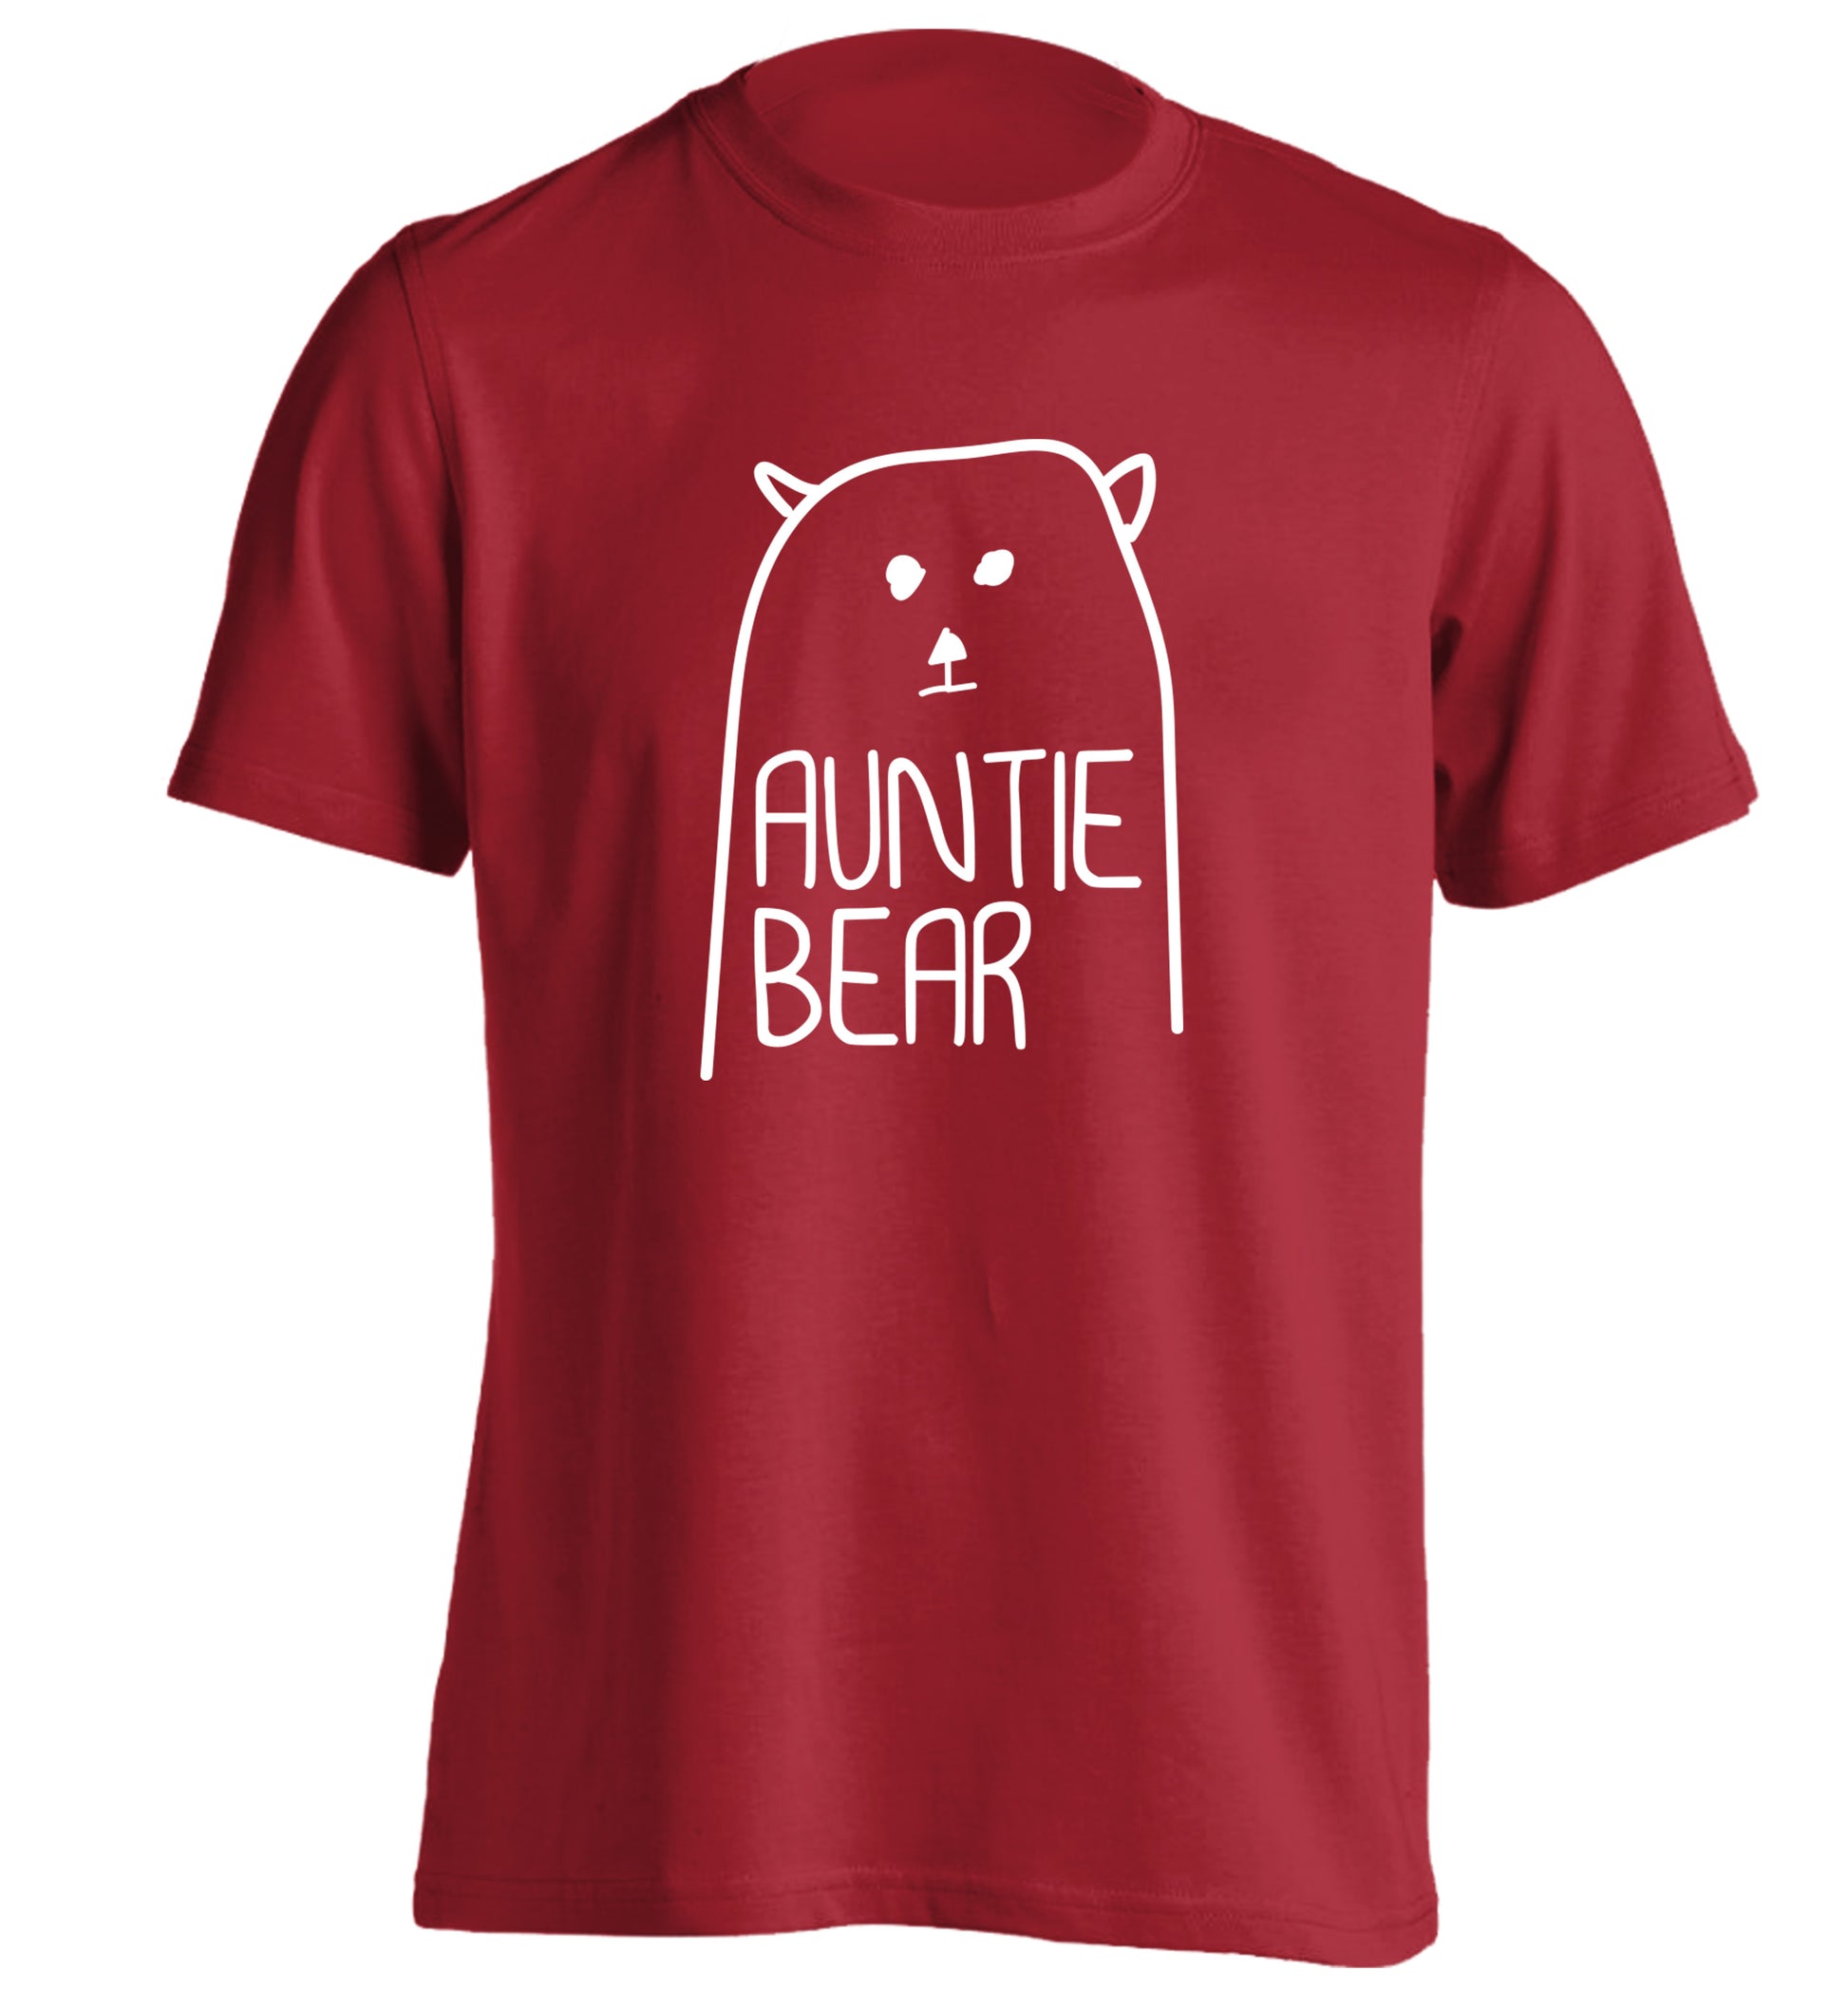 Auntie bear adults unisex red Tshirt 2XL